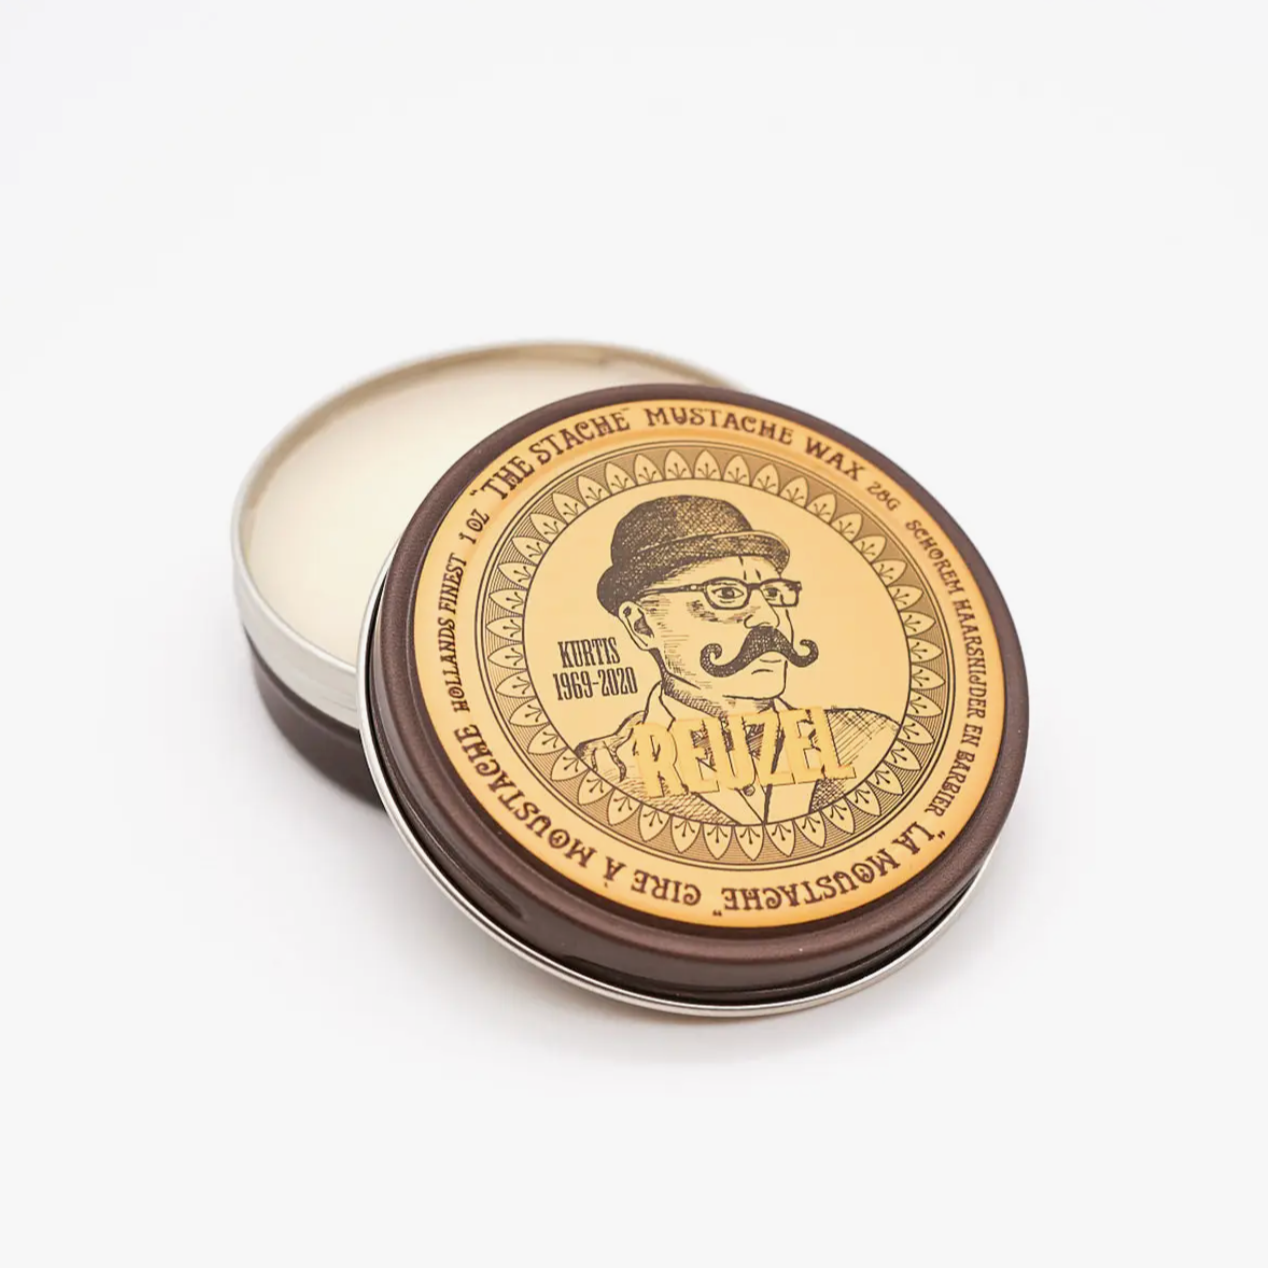 Reuzel Bourbon Sidecar Mustache Wax